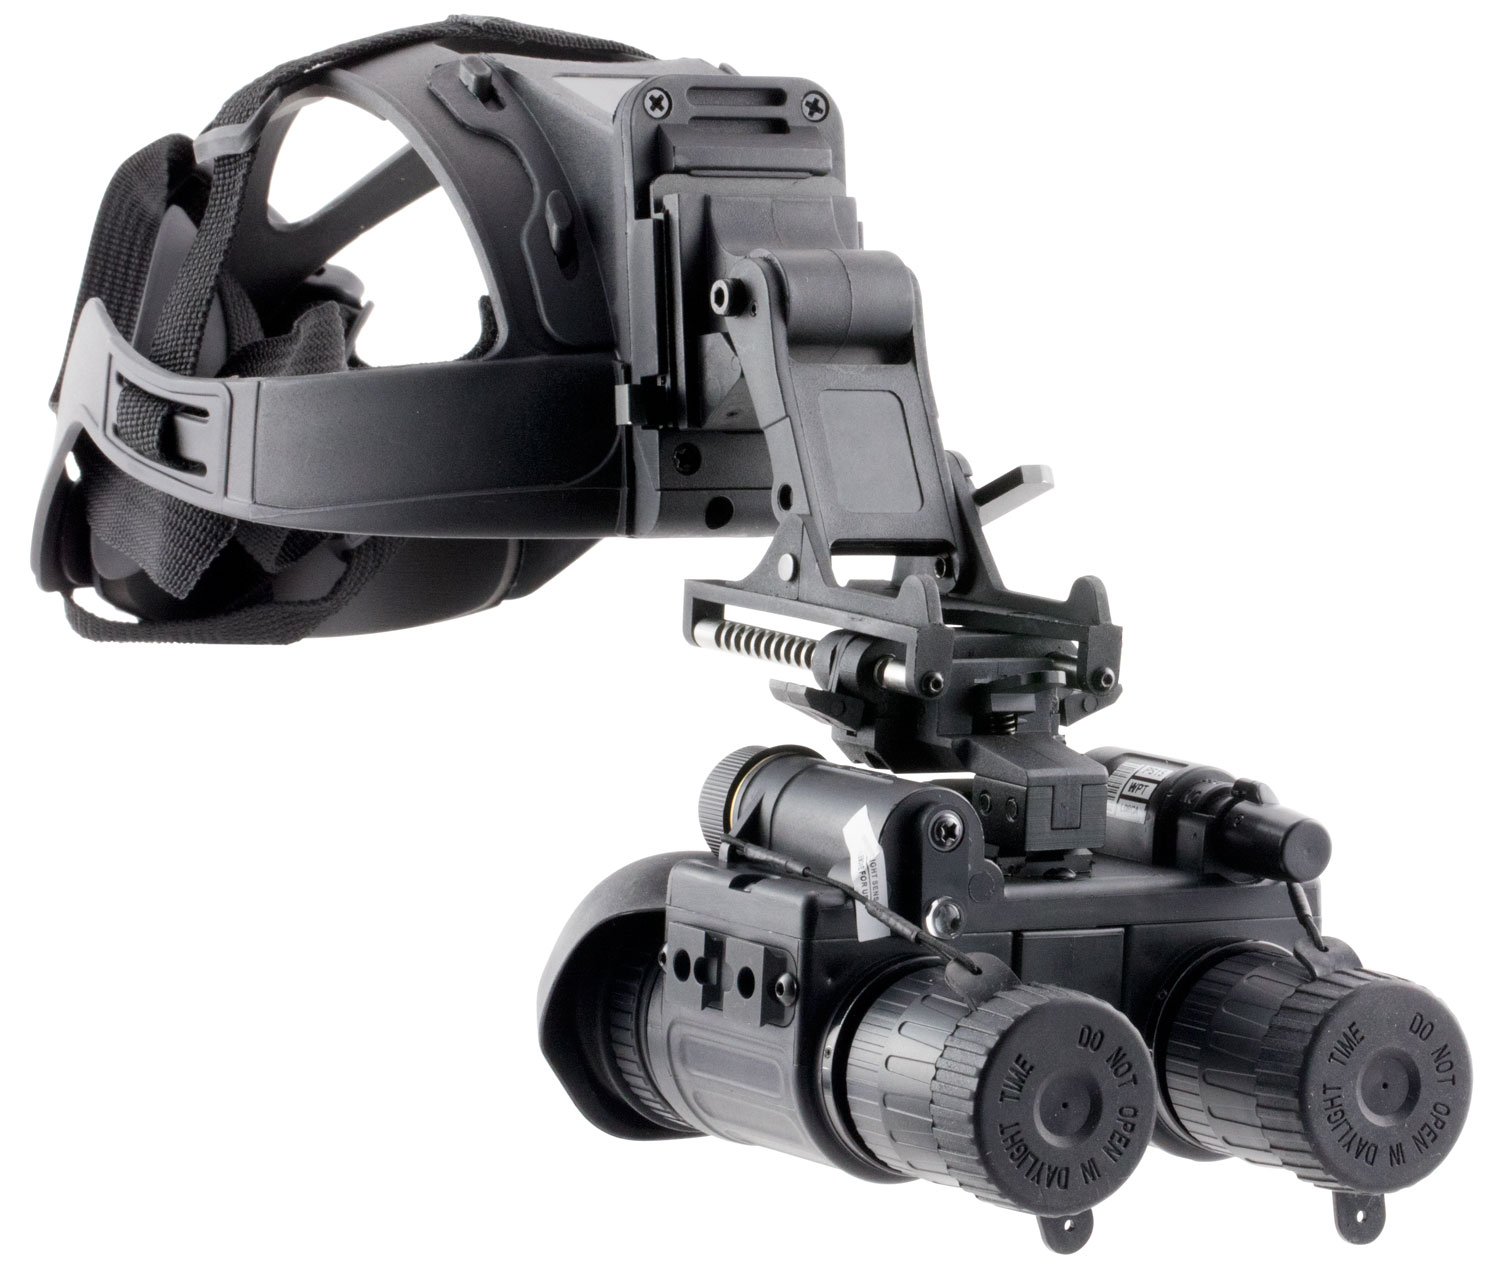 ATN NVGOPS15WP PS15 WPT Night Vision Goggles Black 1x 27mm Generation WPT 51-64 lp/mm Resolution